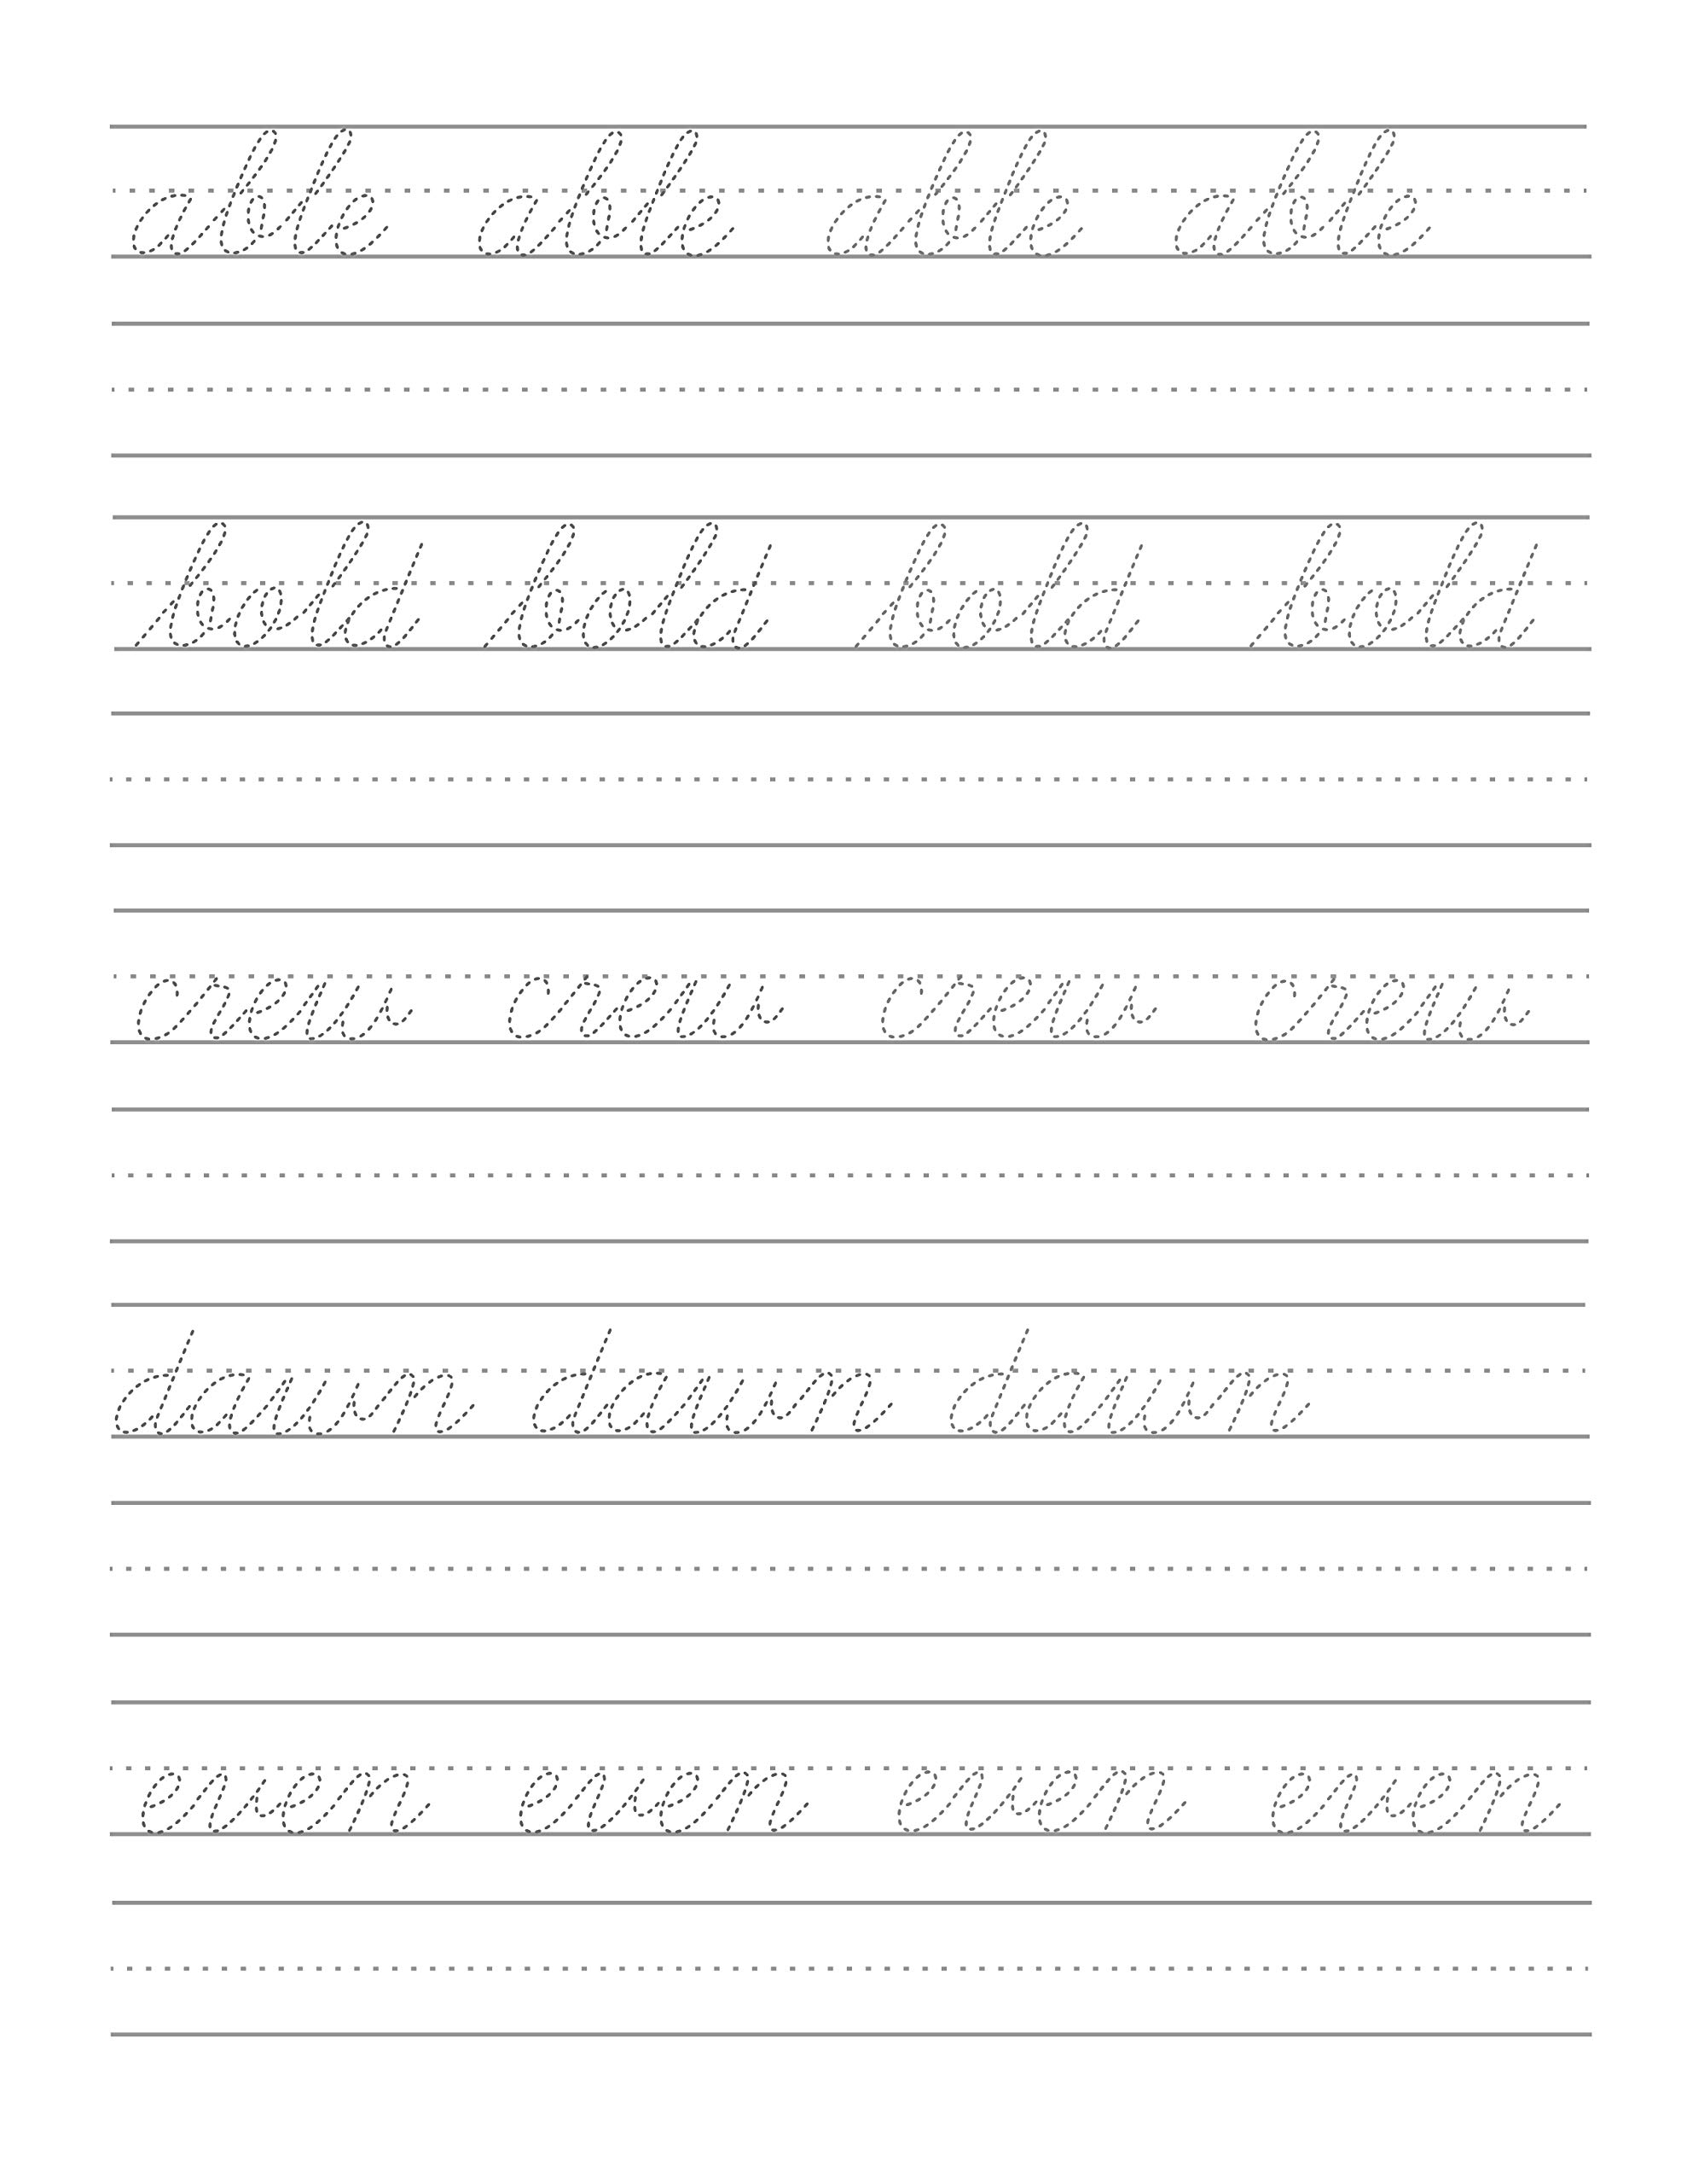 goodnotes handwriting practice sheet